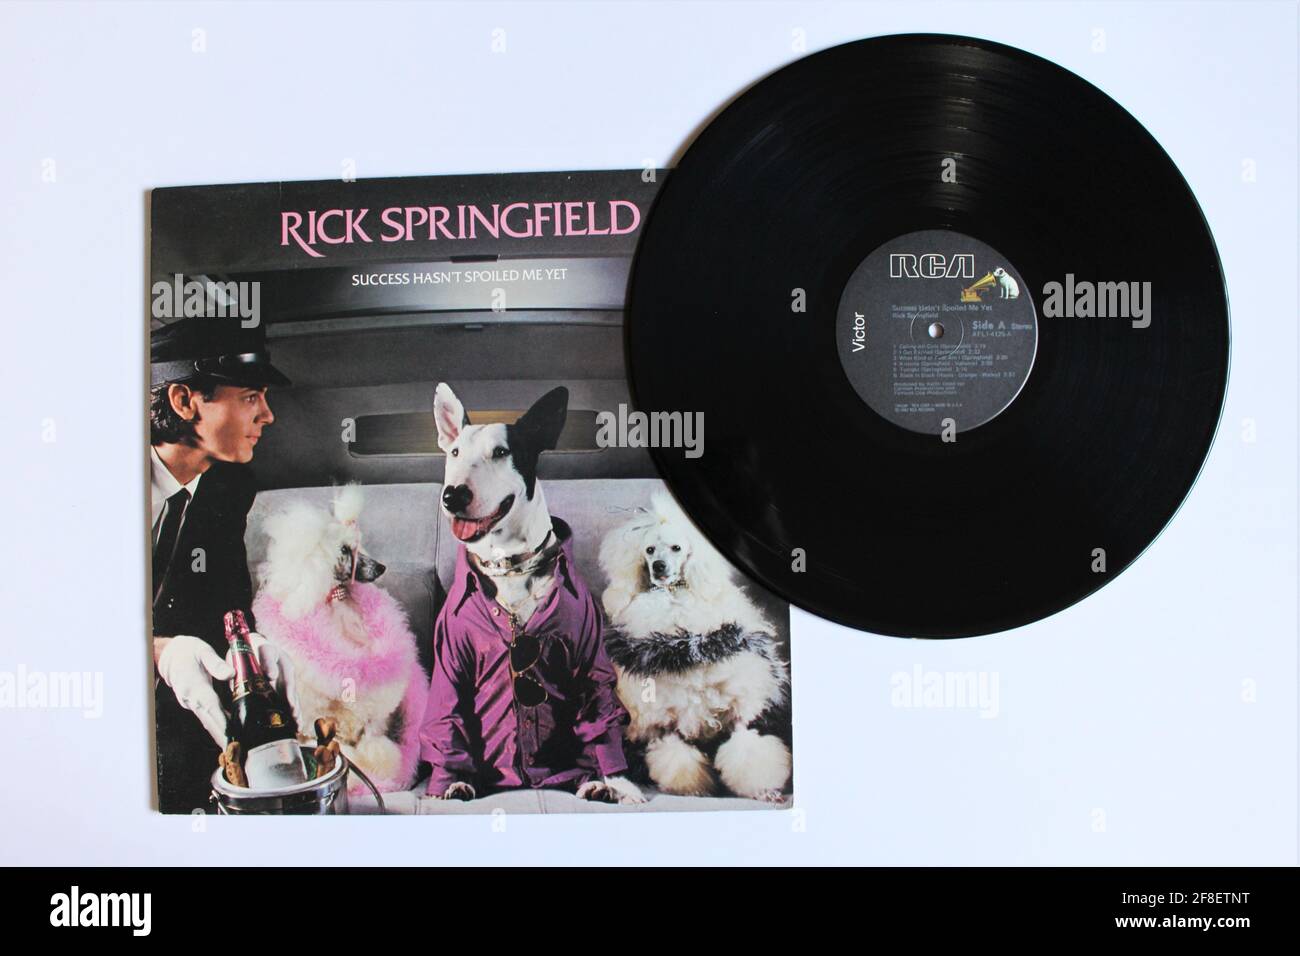 Pop rock artist, Rick Springfield music album on vinyl record LP disc. Titled: The Genius Success Hasn't Spoiled Me Yet album cover Stock Photo